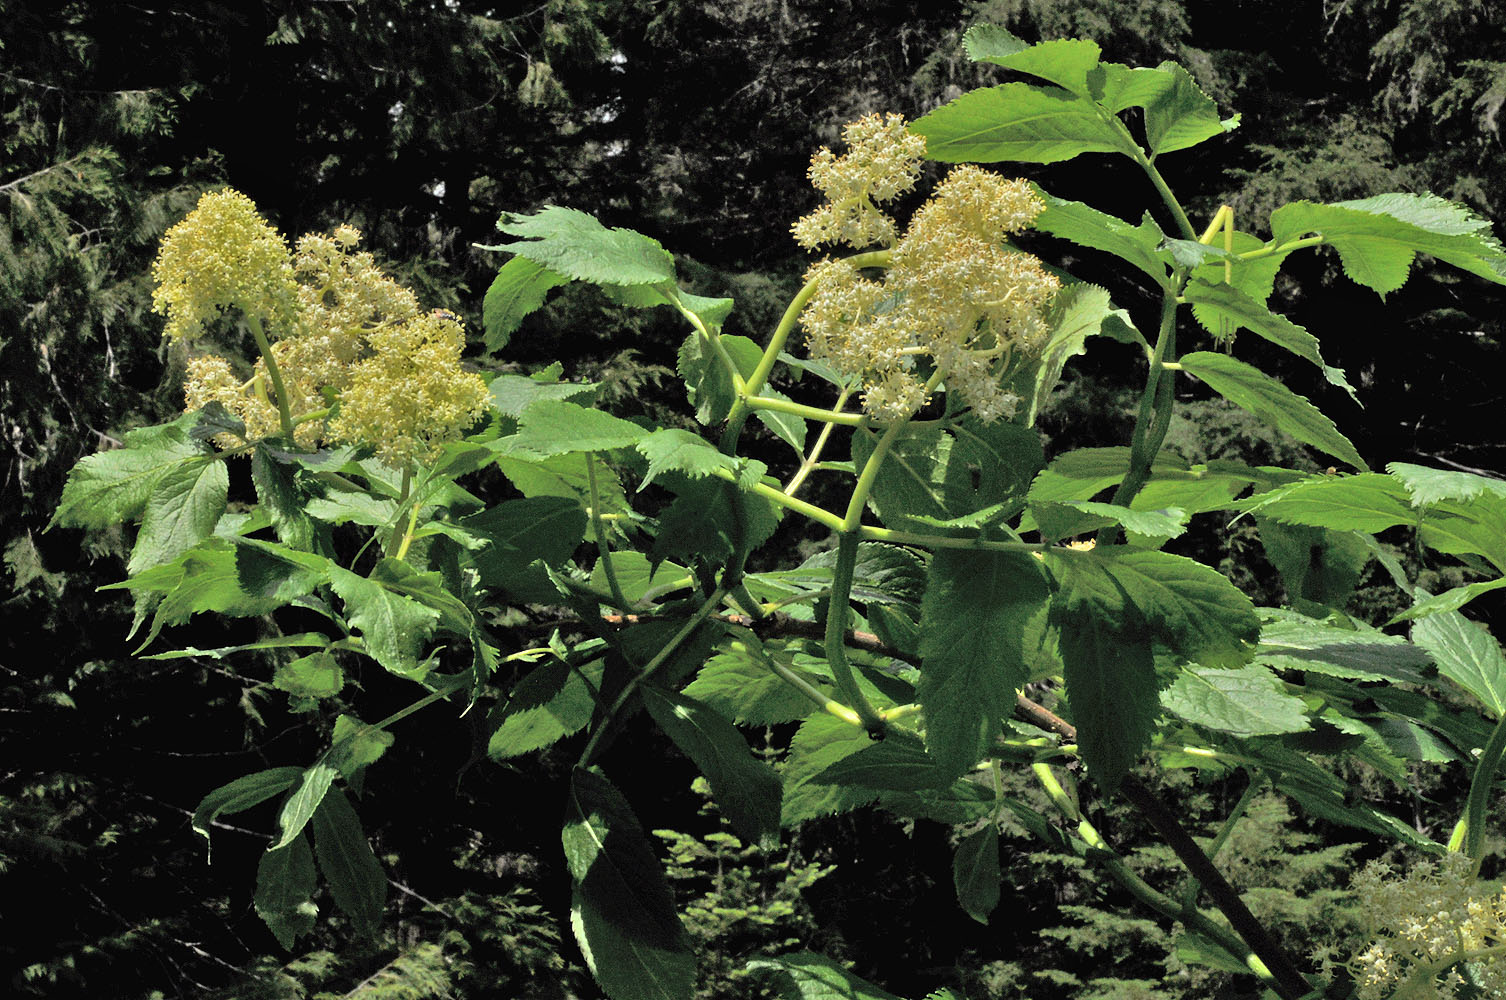 Flora of Eastern Washington Image: Sambucus racemosa